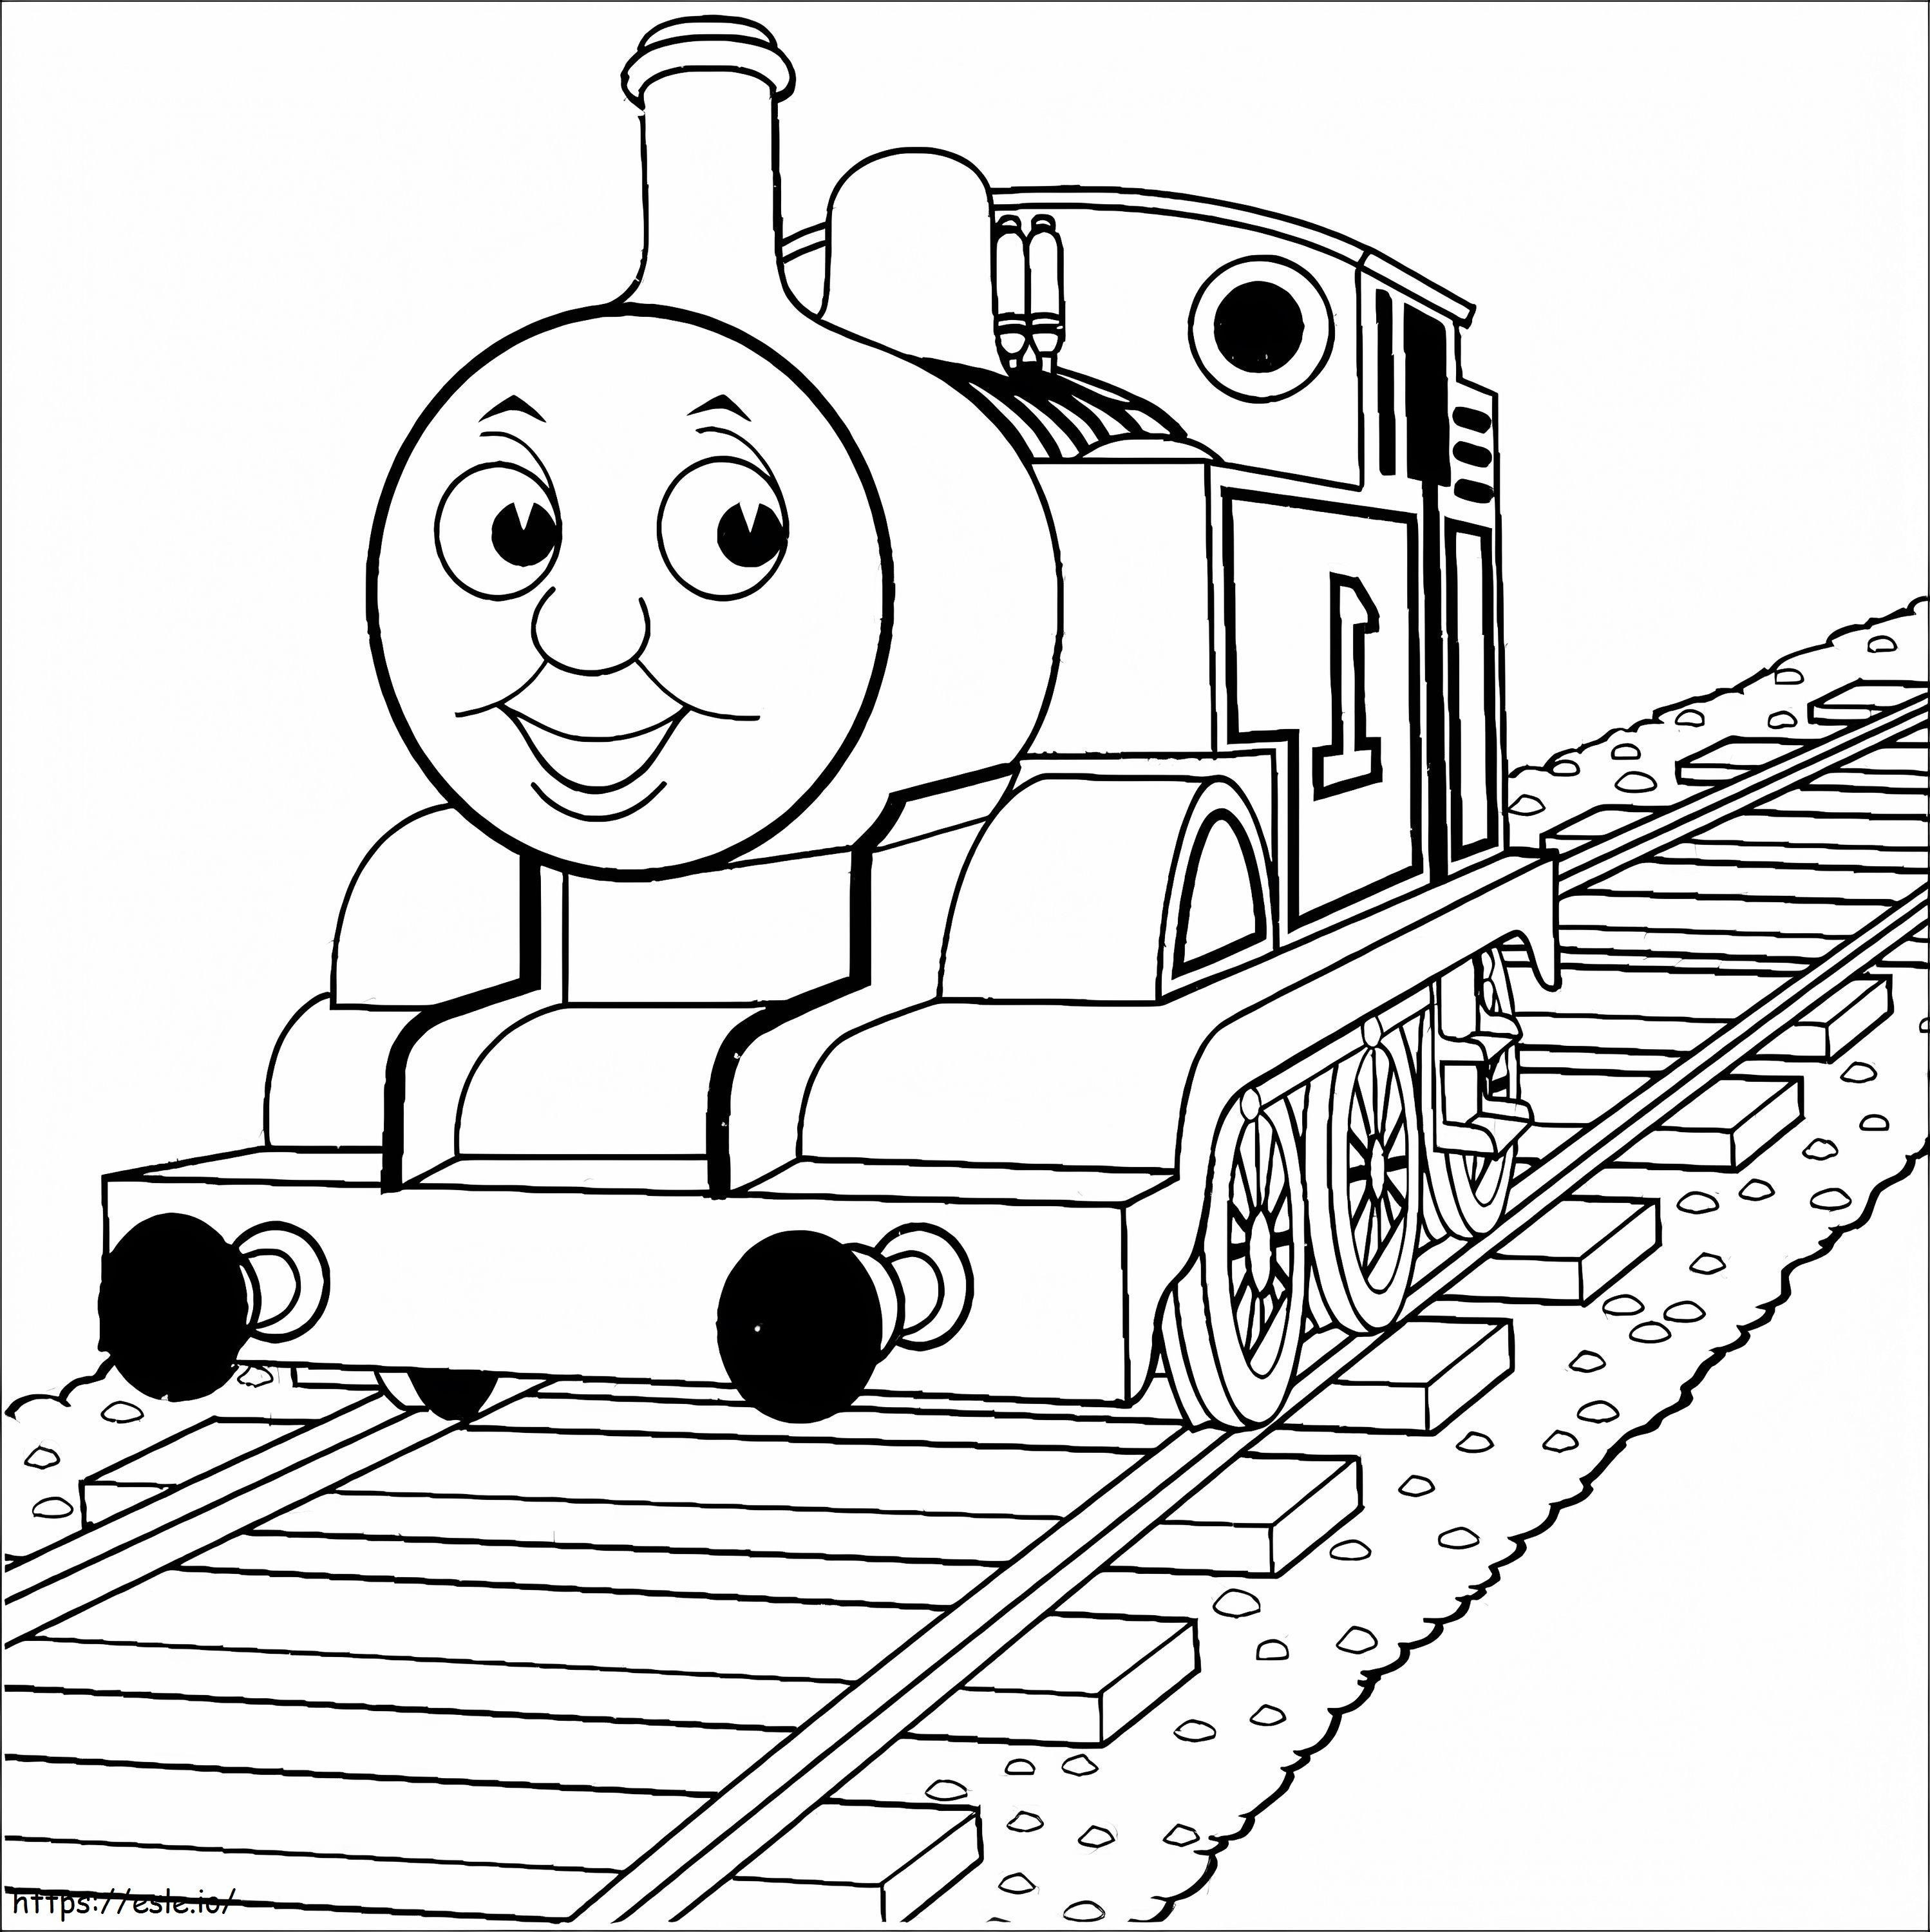 Locomotiva de desenho animado para colorir